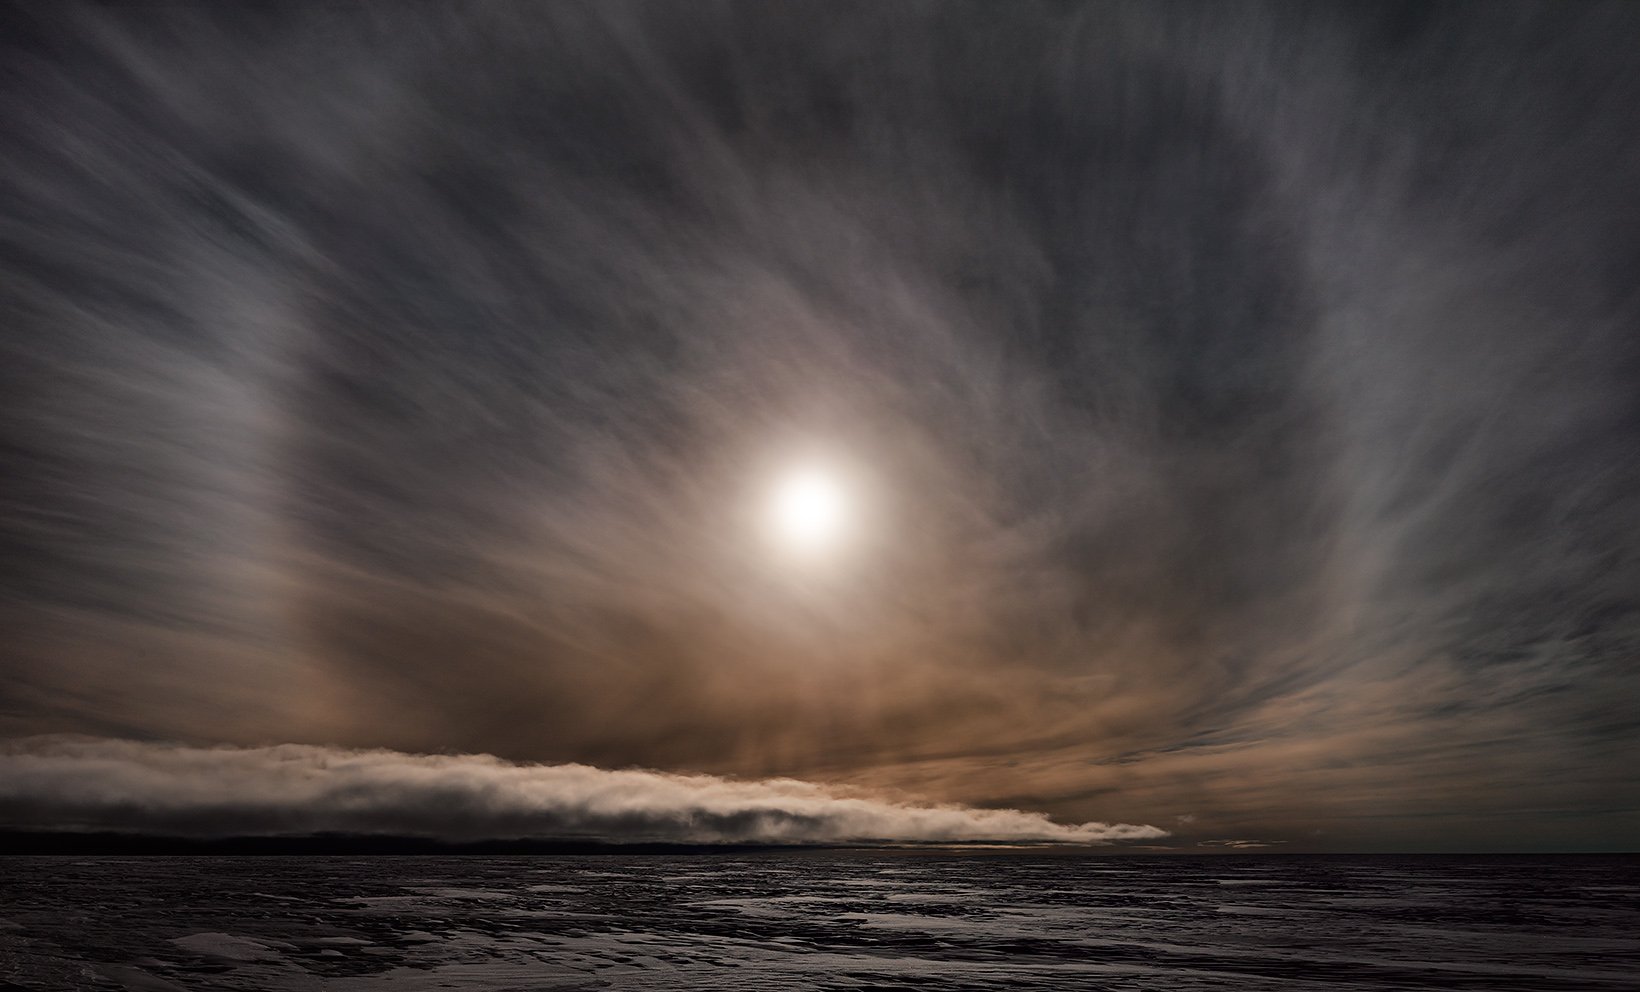   Icesheet #2564, late sun with 22˚ halo,&nbsp; 2013, digital pigment print, 120 x 198cm. 